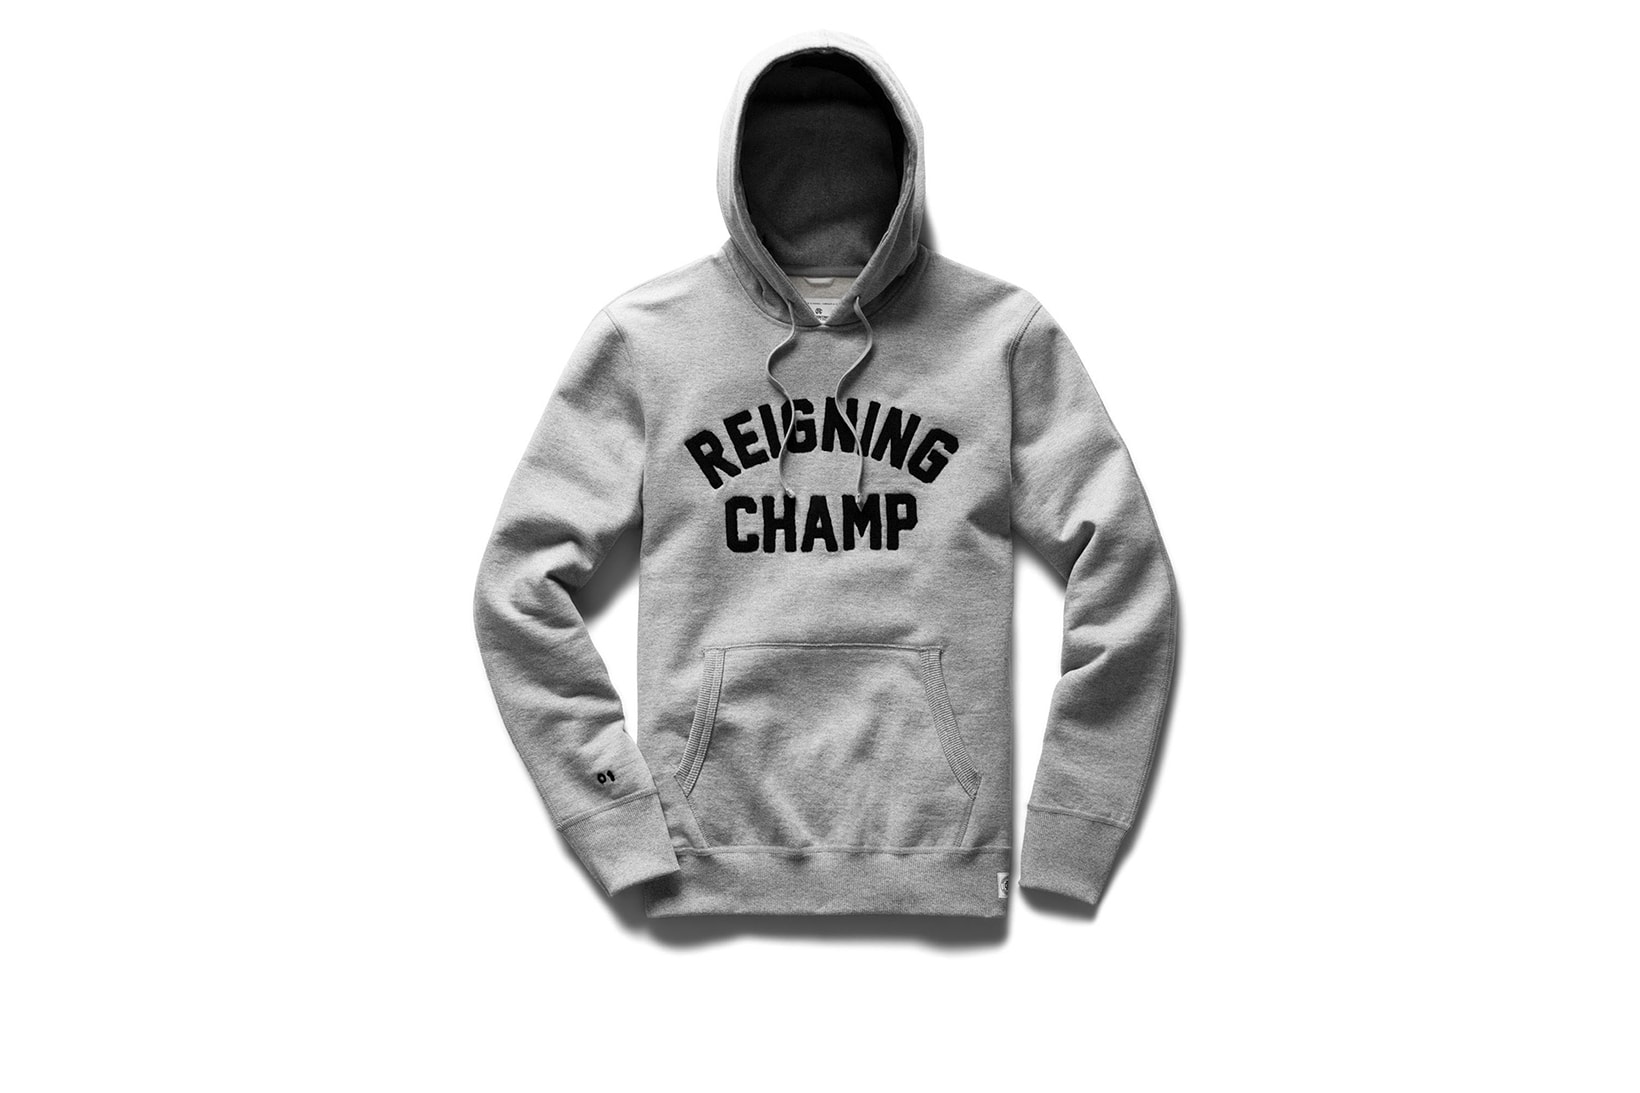 Reigning Champ One Decade No Compromise Capsule 10 Year Anniversary fashion black grey gray varsity jacket coat rc hoodie crewneck sweatshirt sweatpants